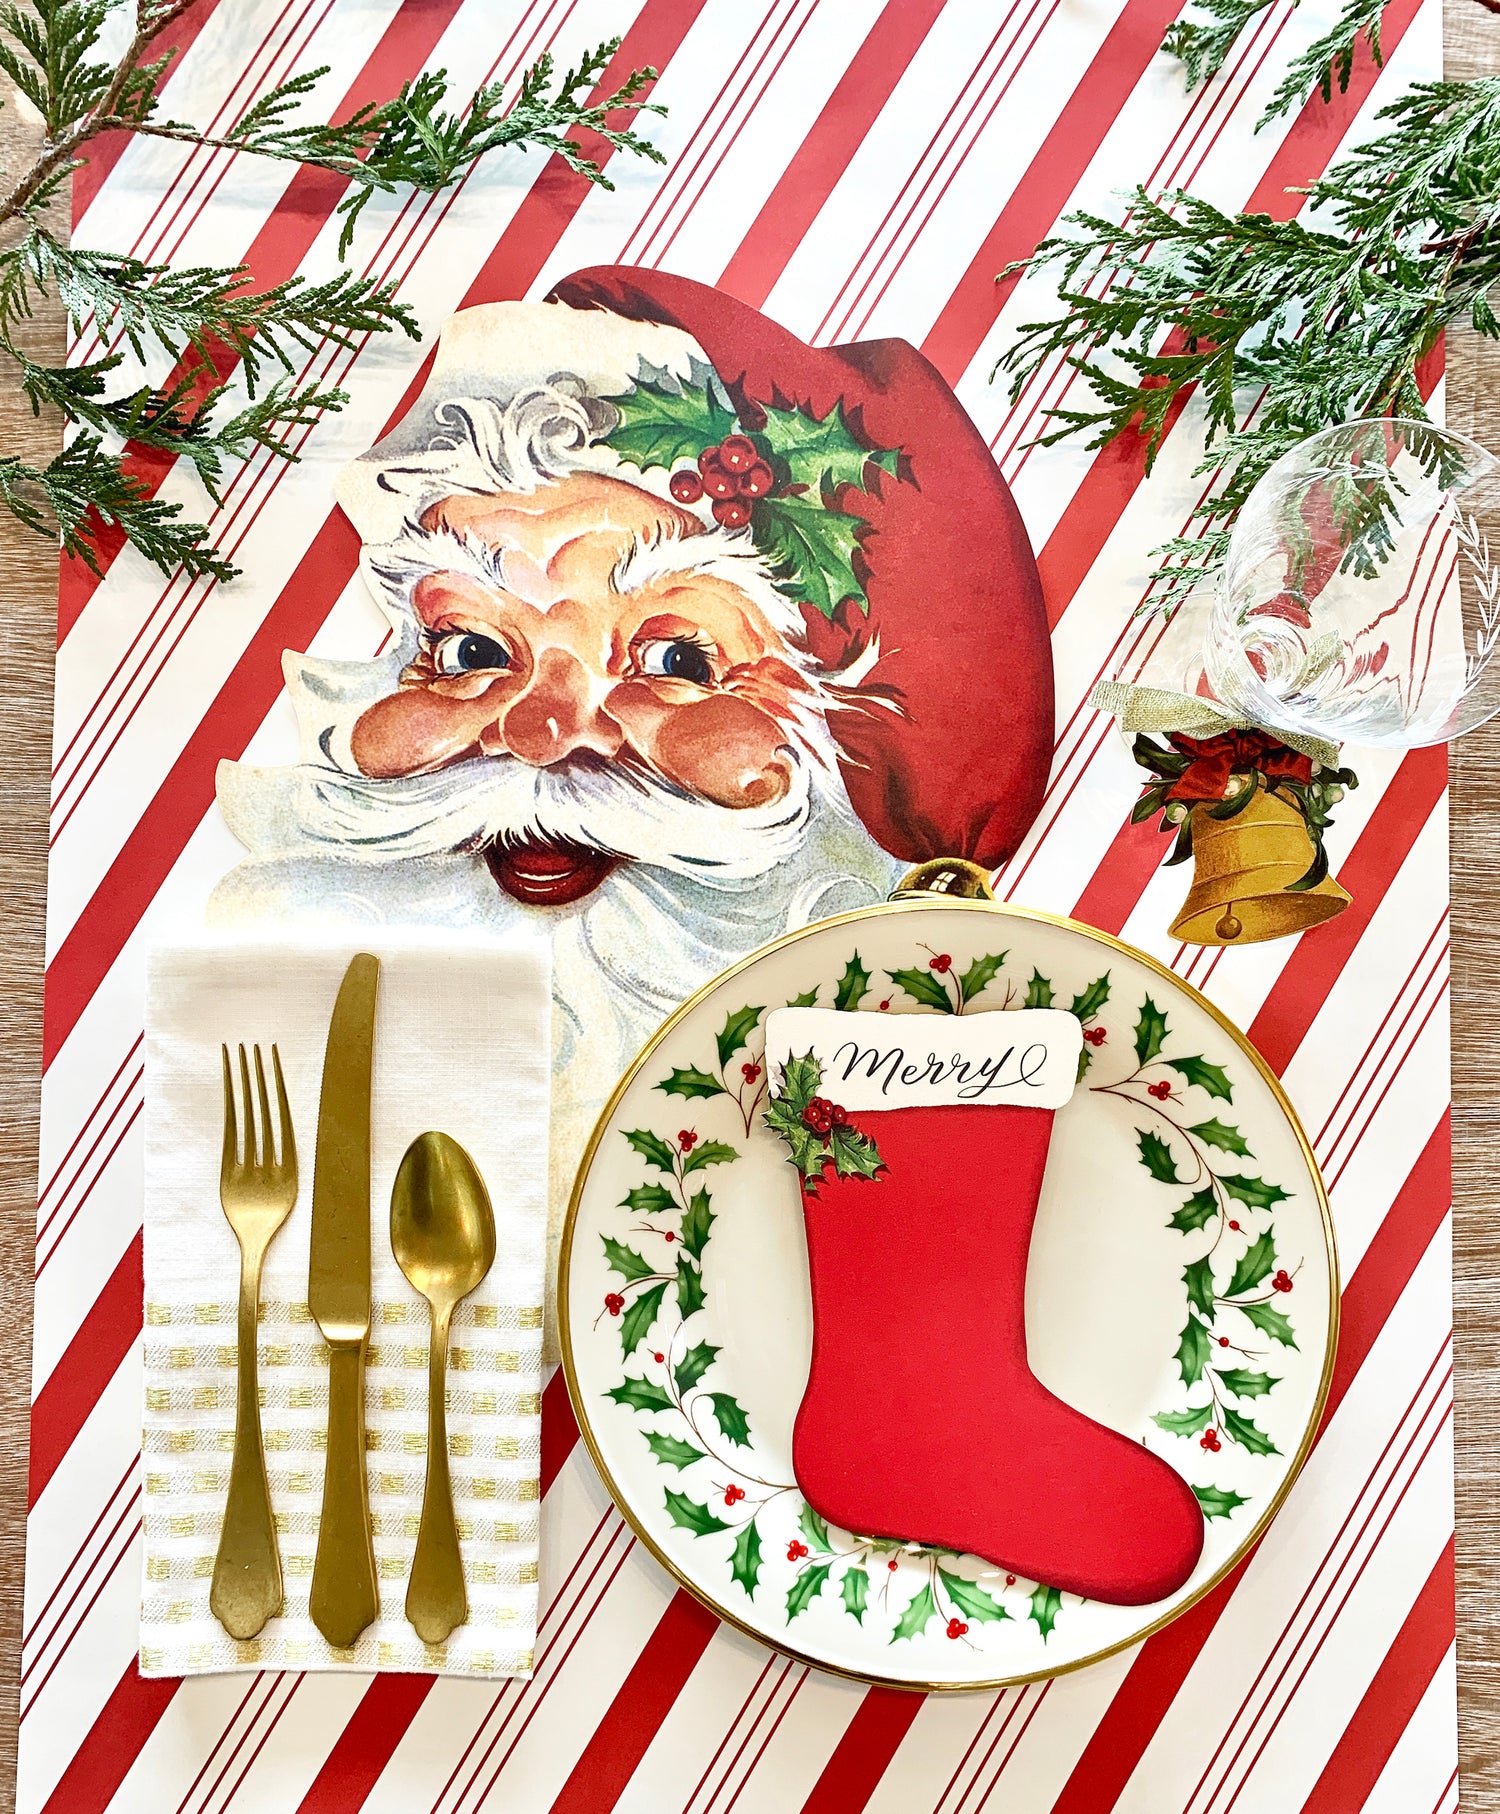 A die-cut, vintage-style illustration of Santa Clause&